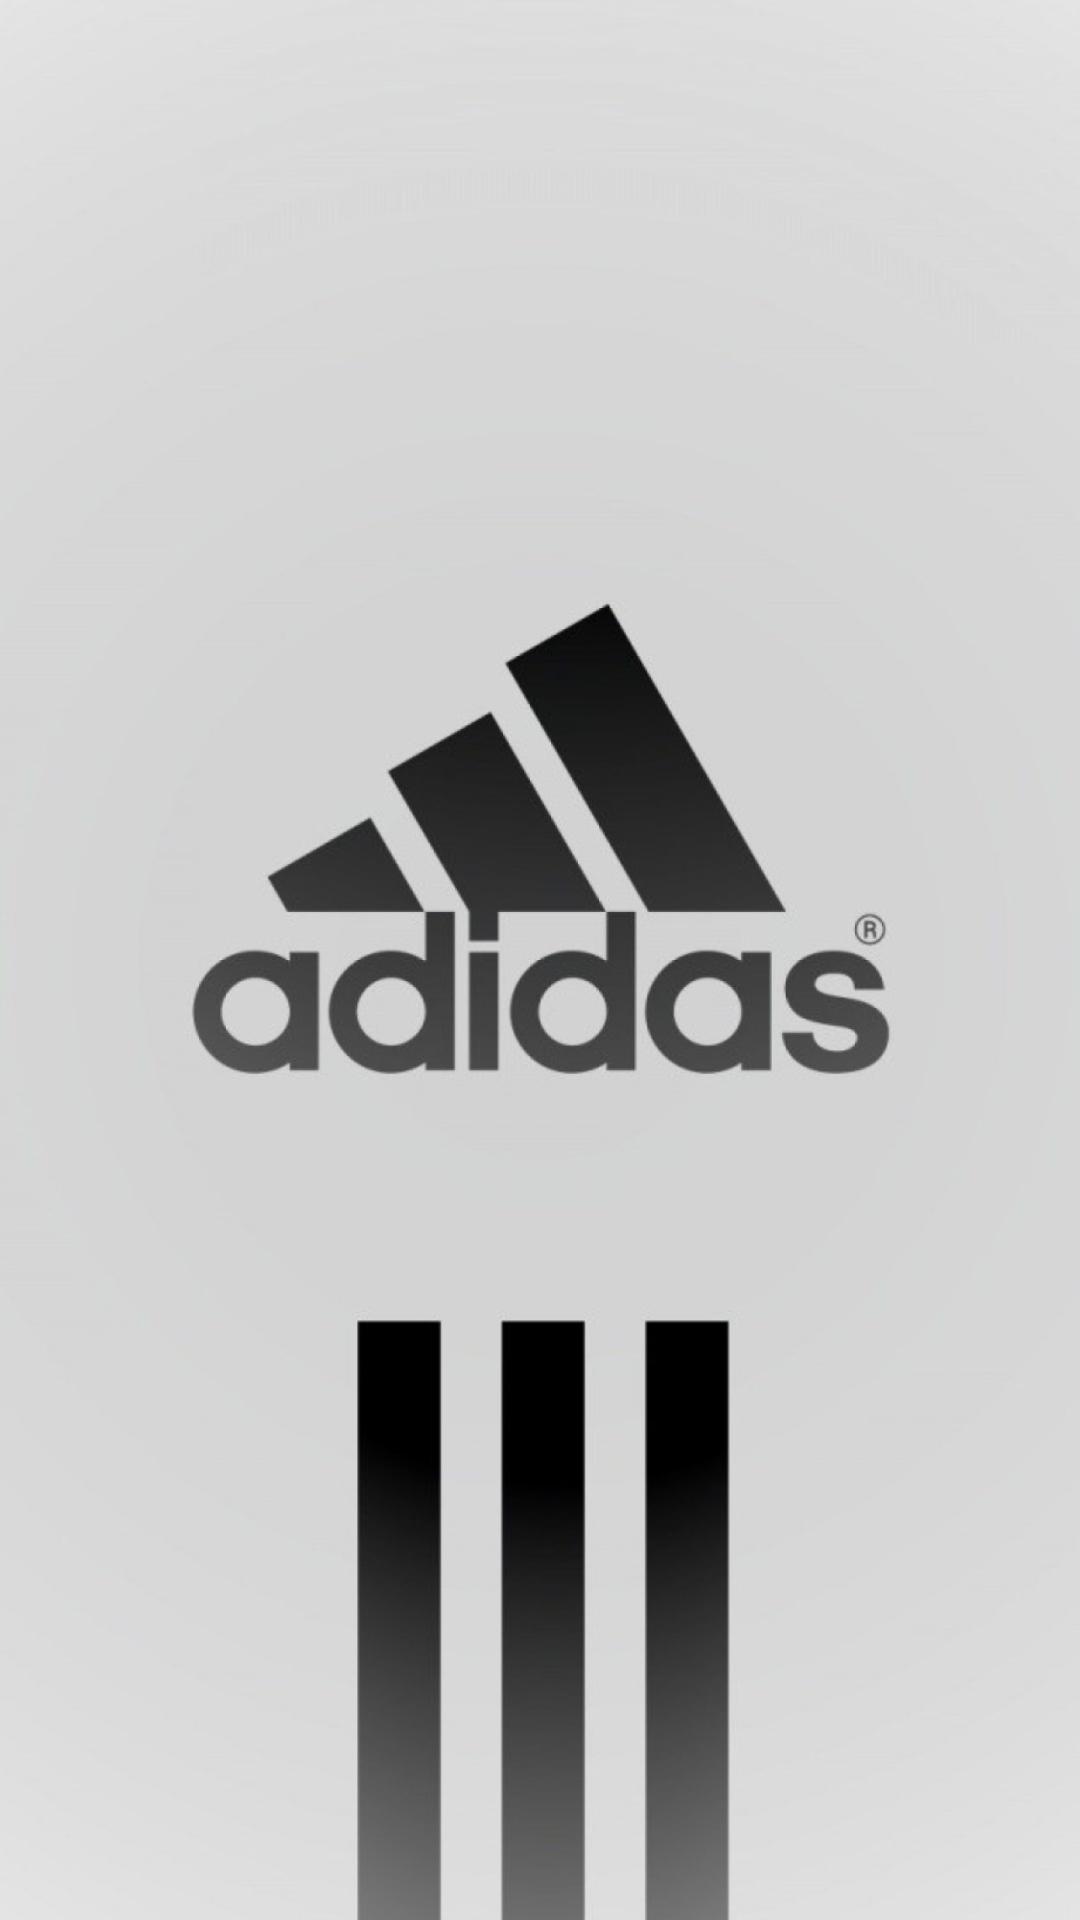 Adidas iPhone HD Wallpaper